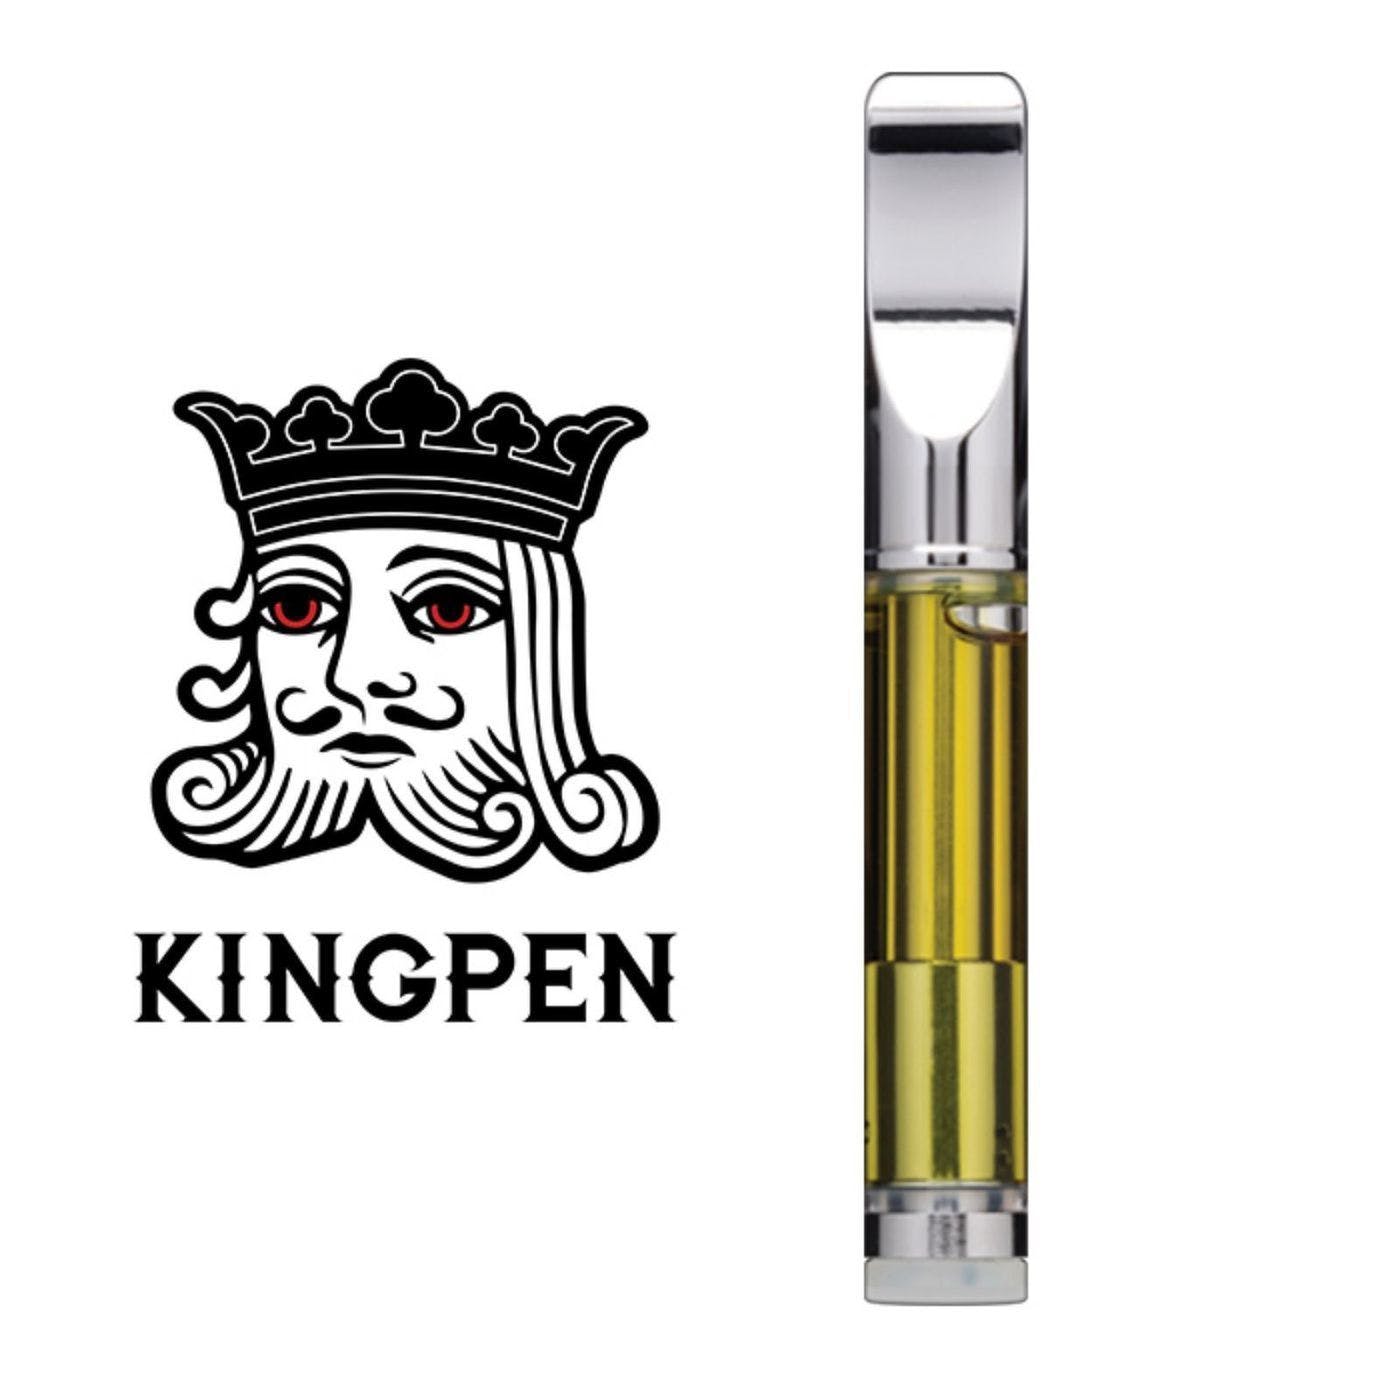 KINGPEN - Three Kings